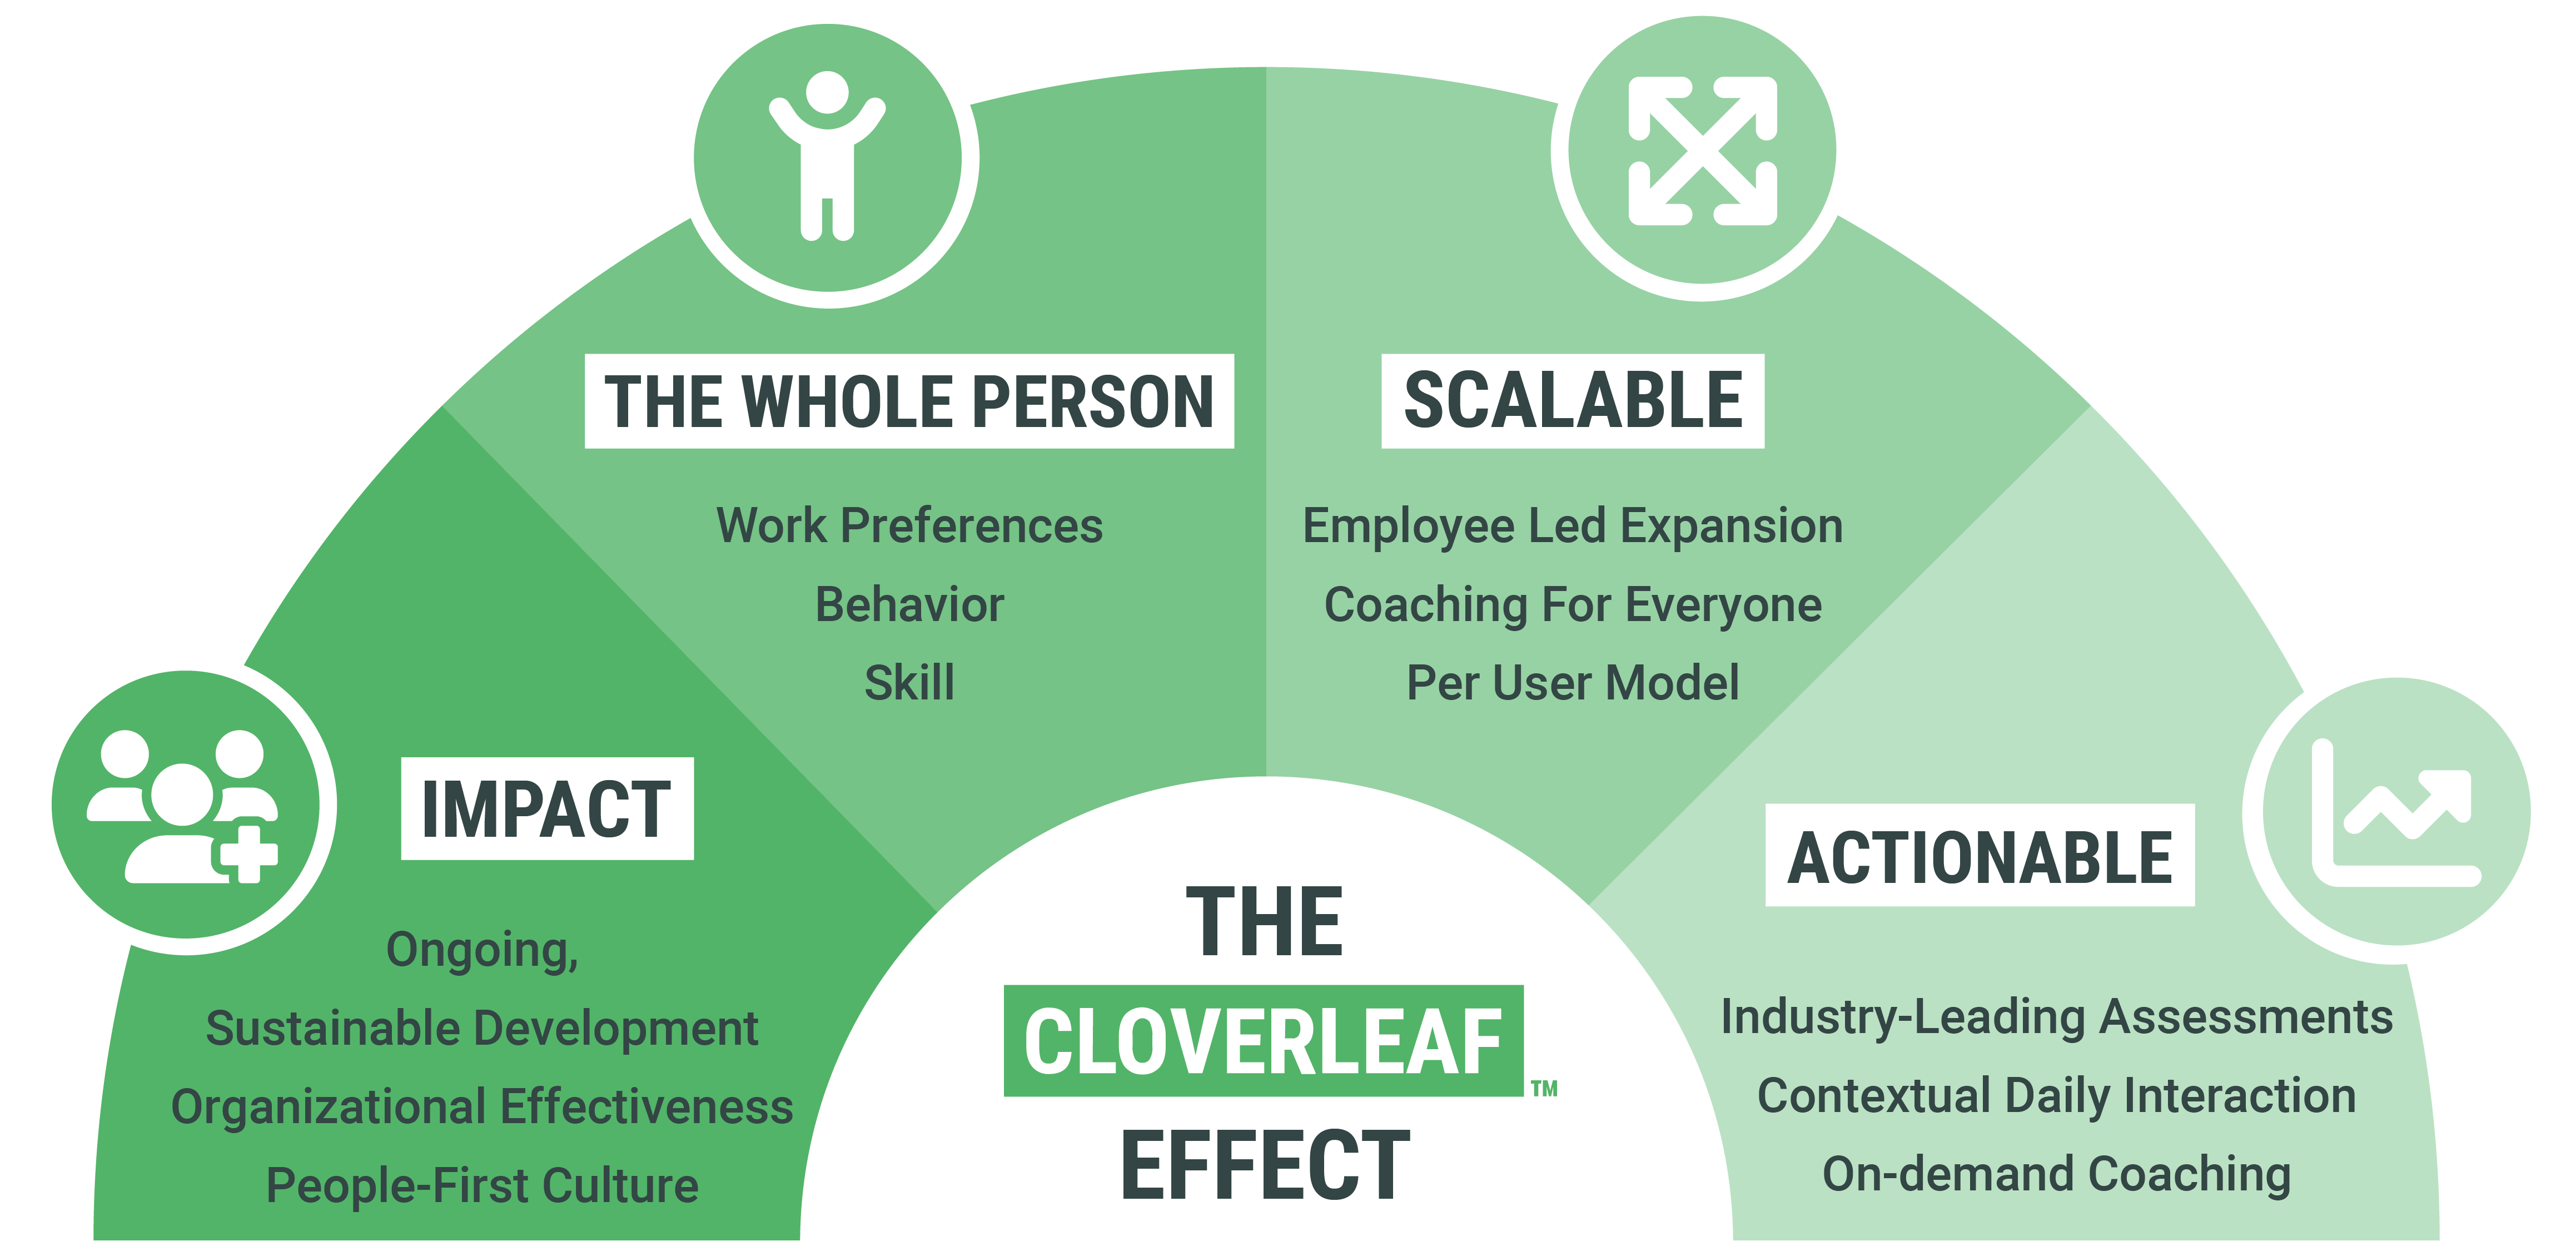 The Cloverleaf Effect